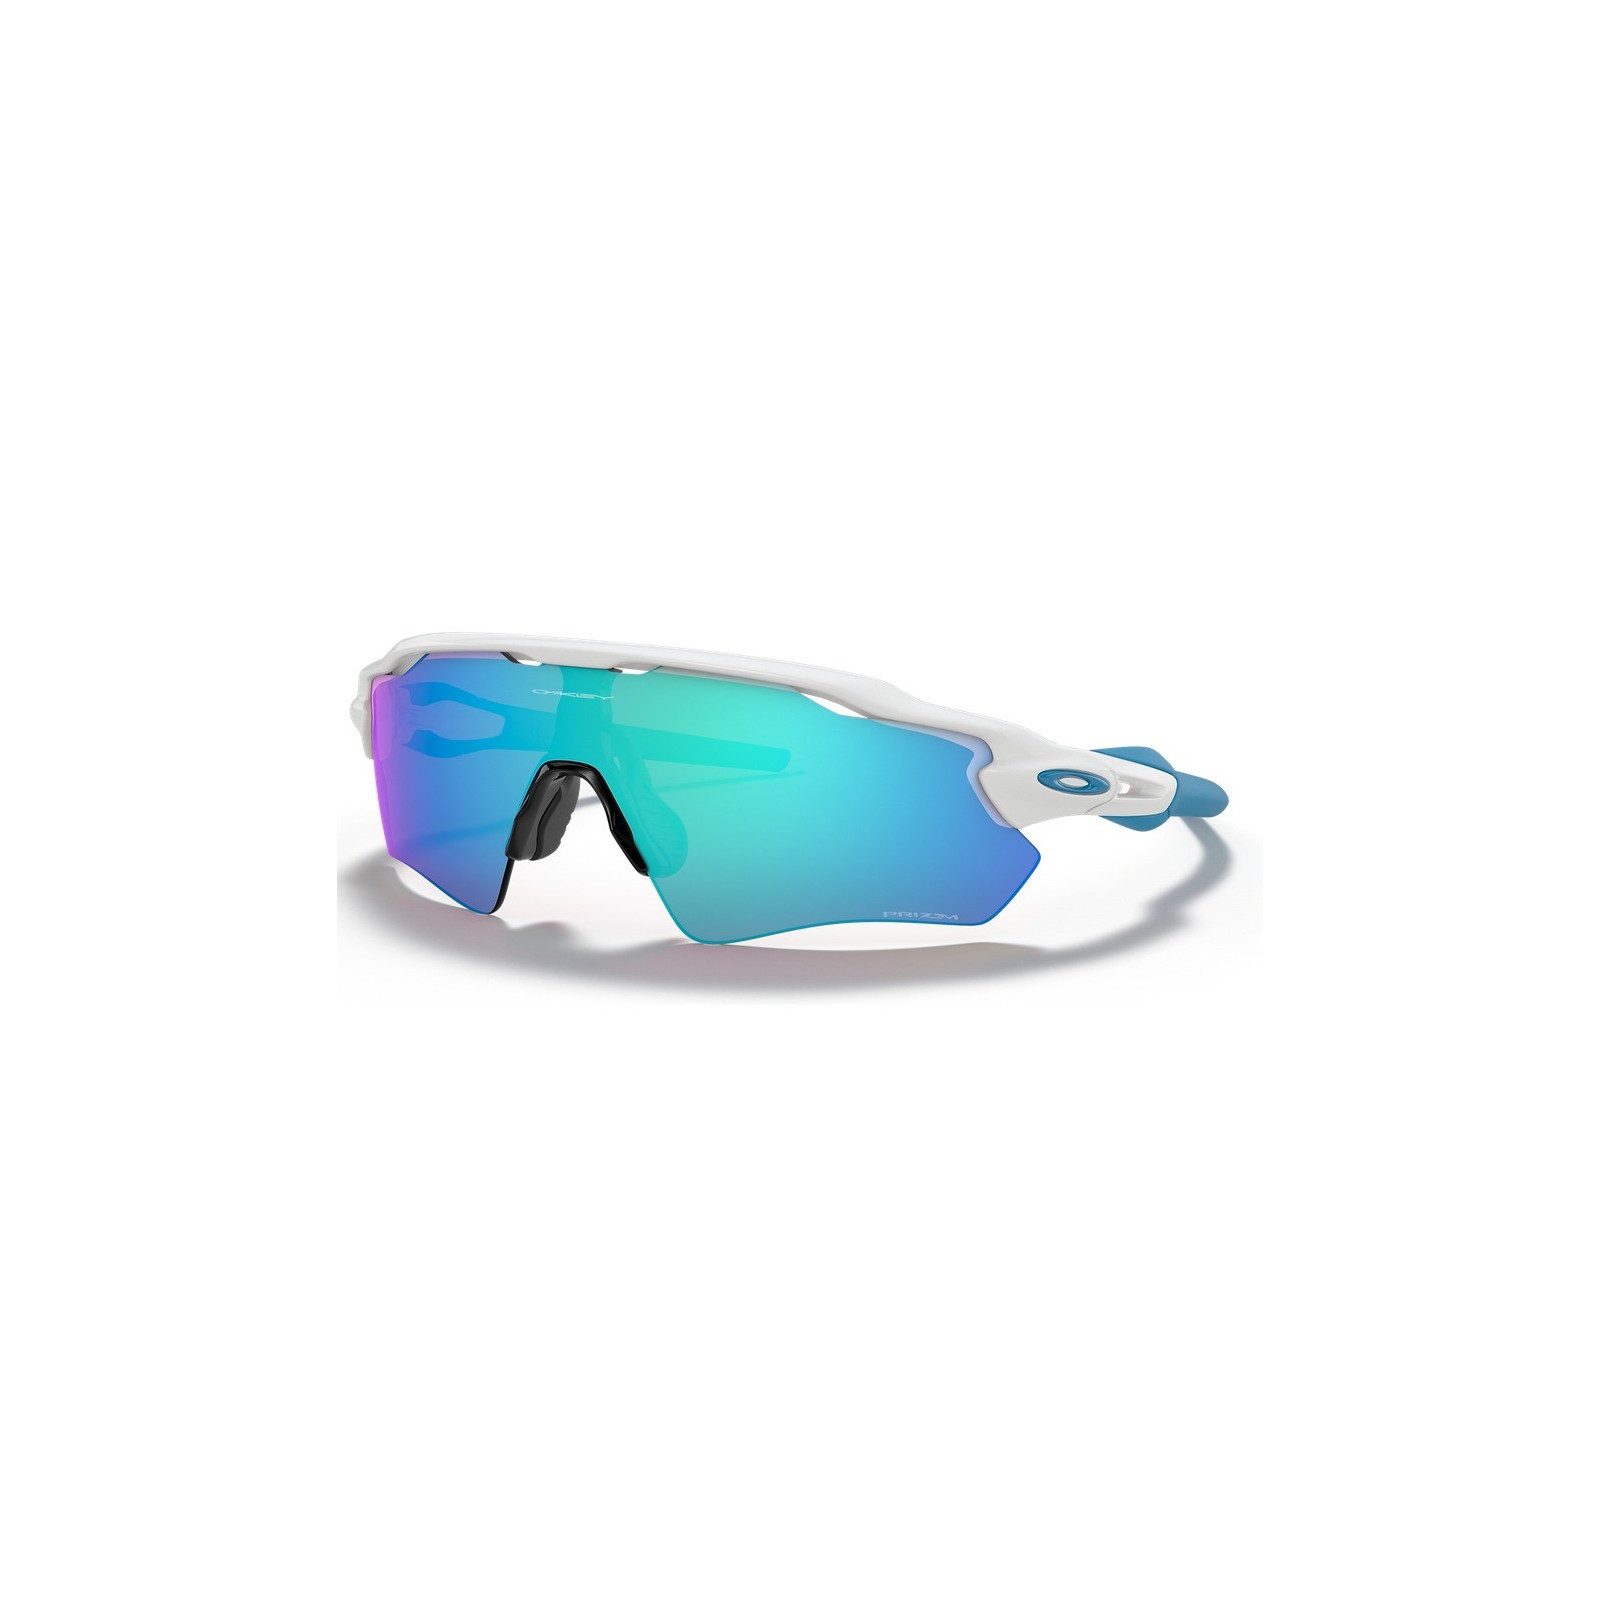 Oakley Radar EV Path Prizm Sapphire Sunglasses - Polished White-Blue